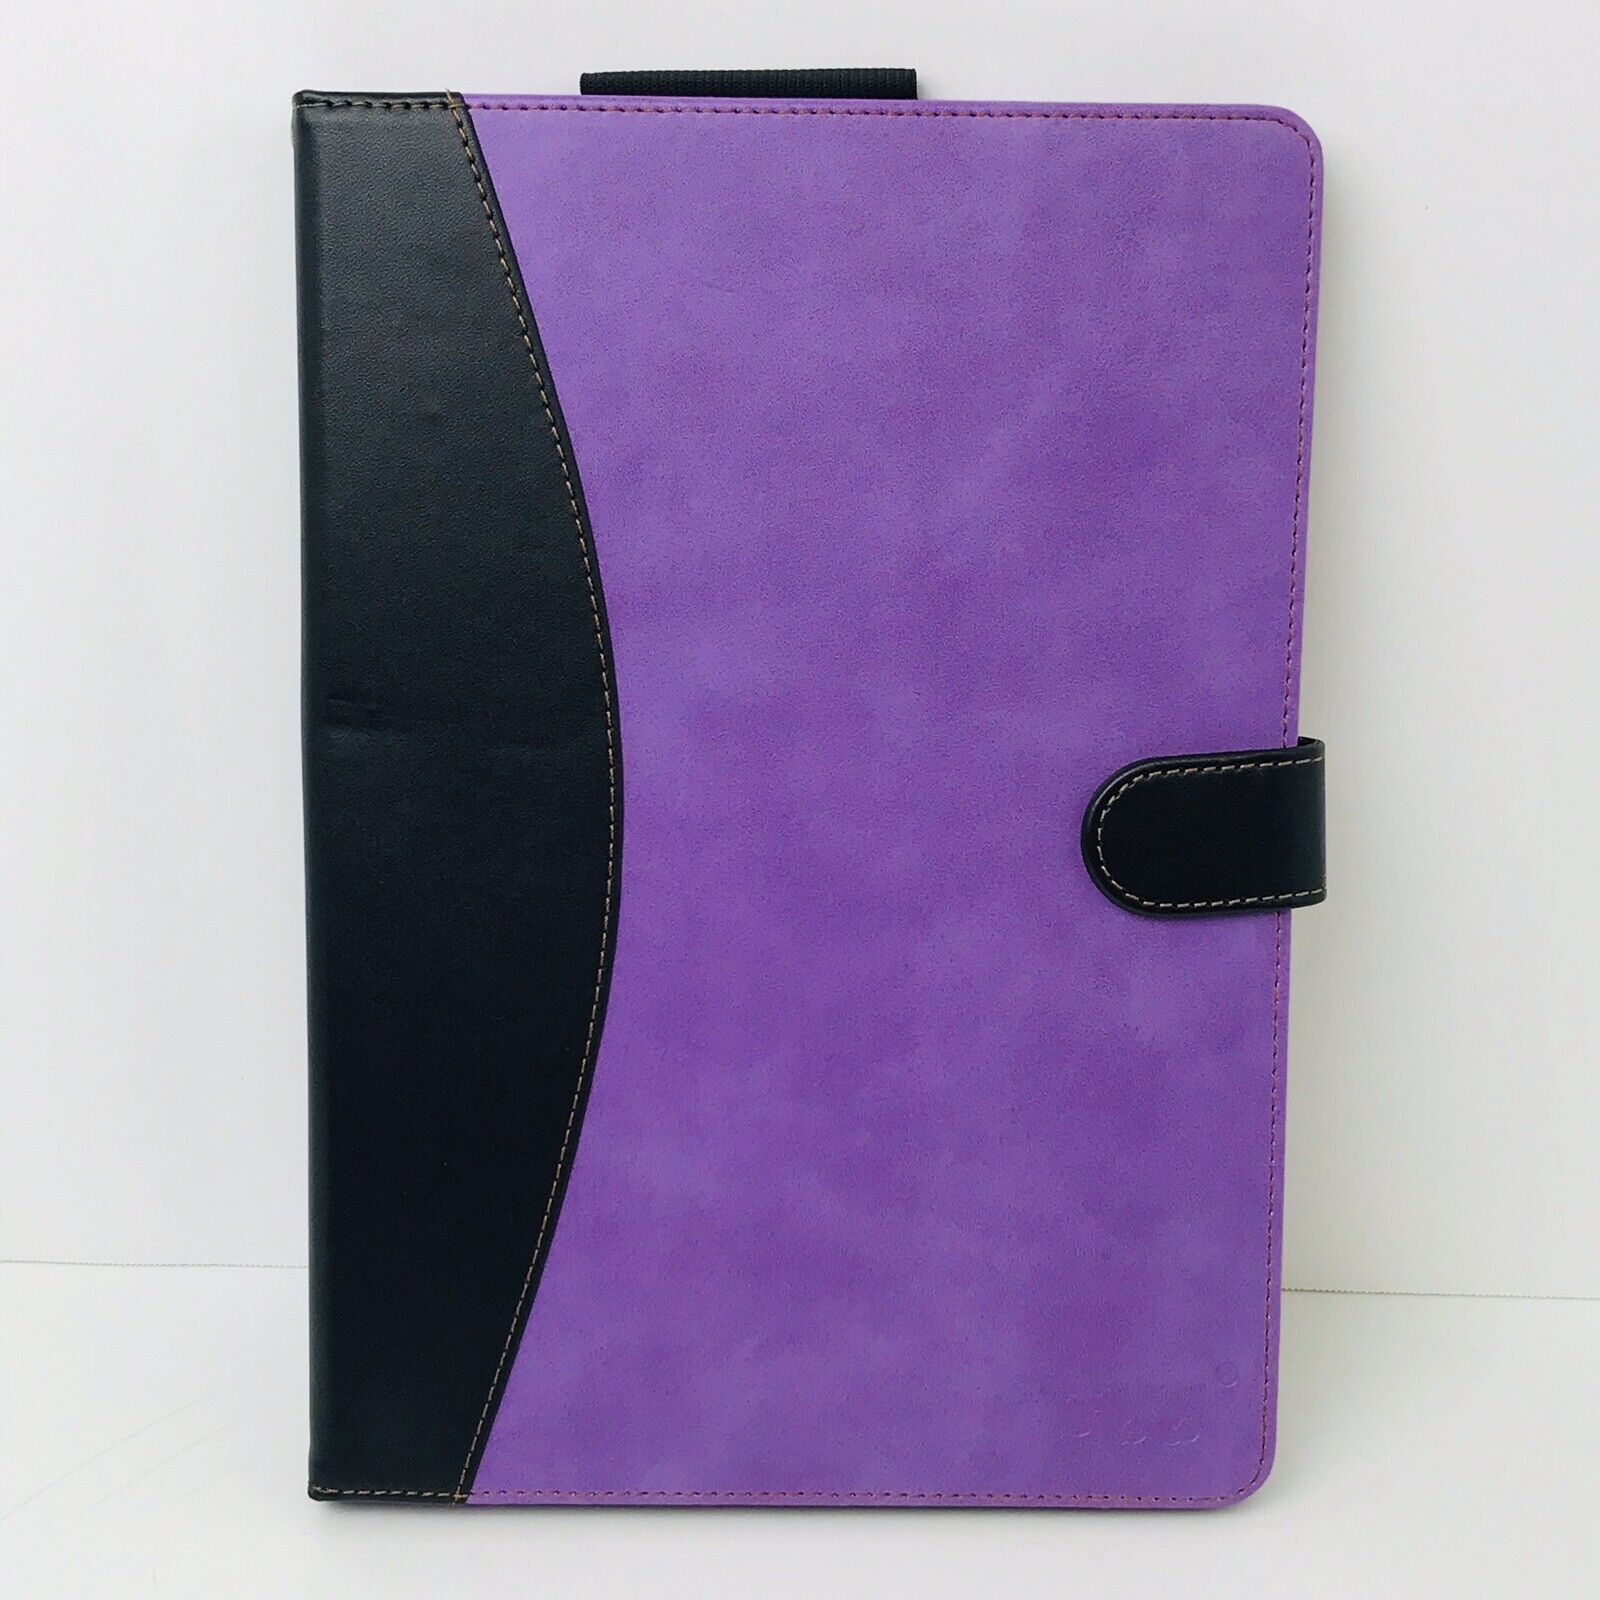 FYY iPad Pro 10.5 Flip Folio Stand Leather Case Cover  Auto Sleep Wake Purple